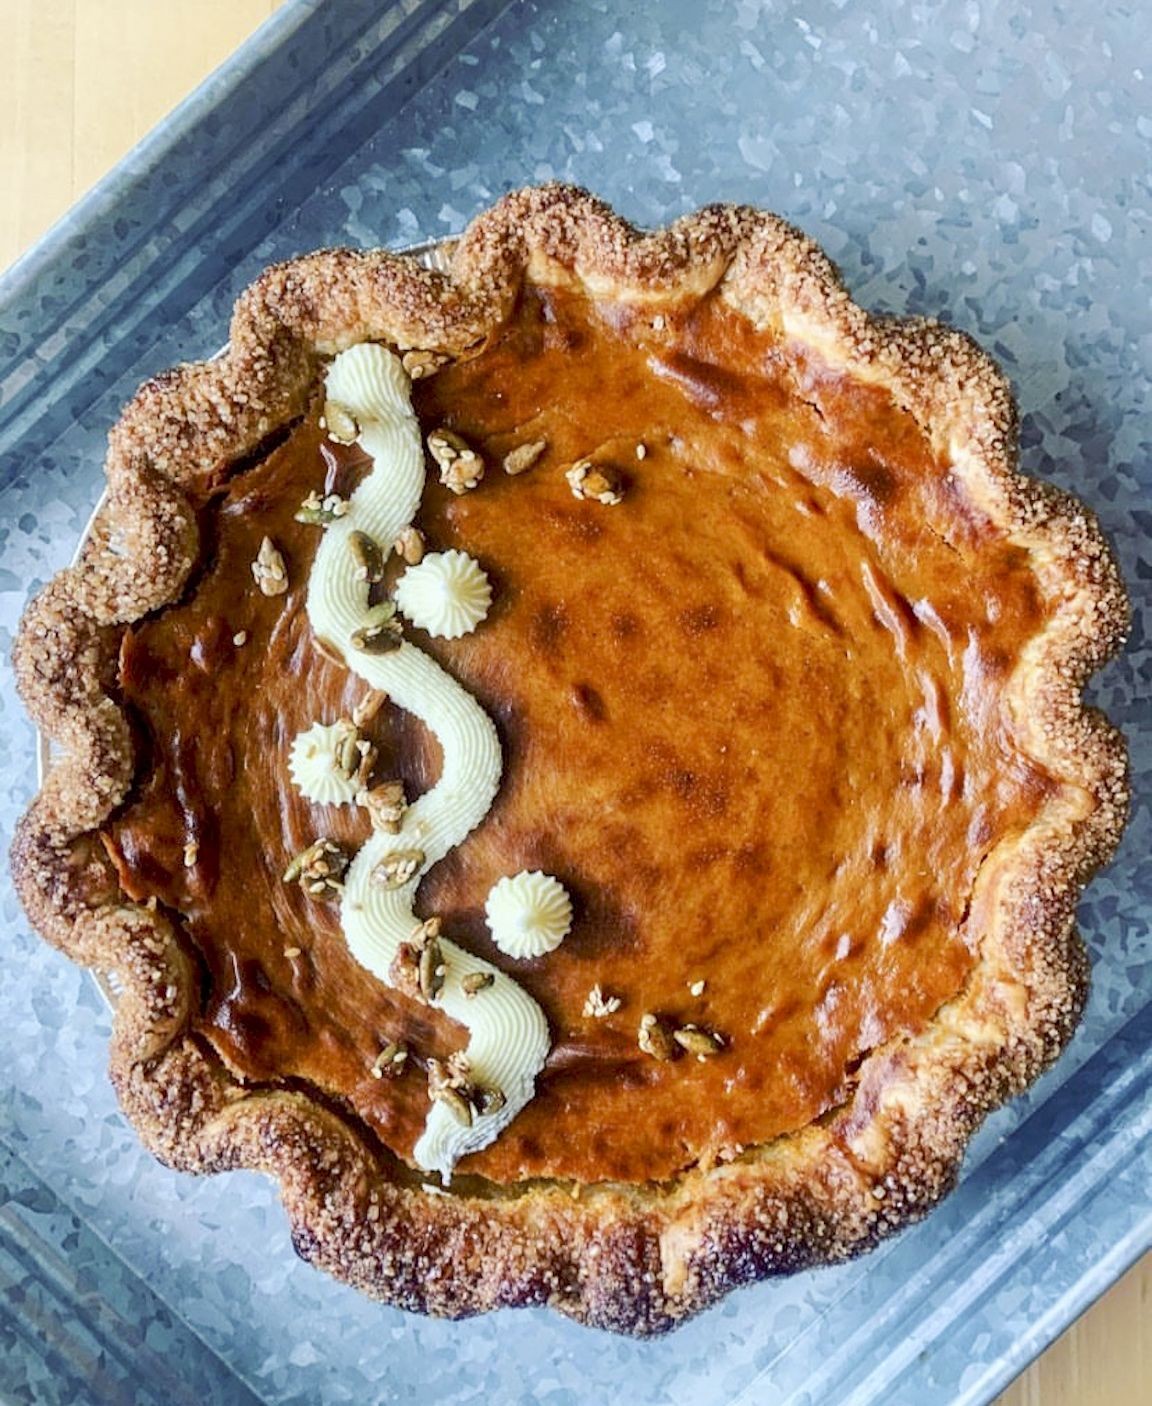 The pumpkin pie from Auspicious Baking Company